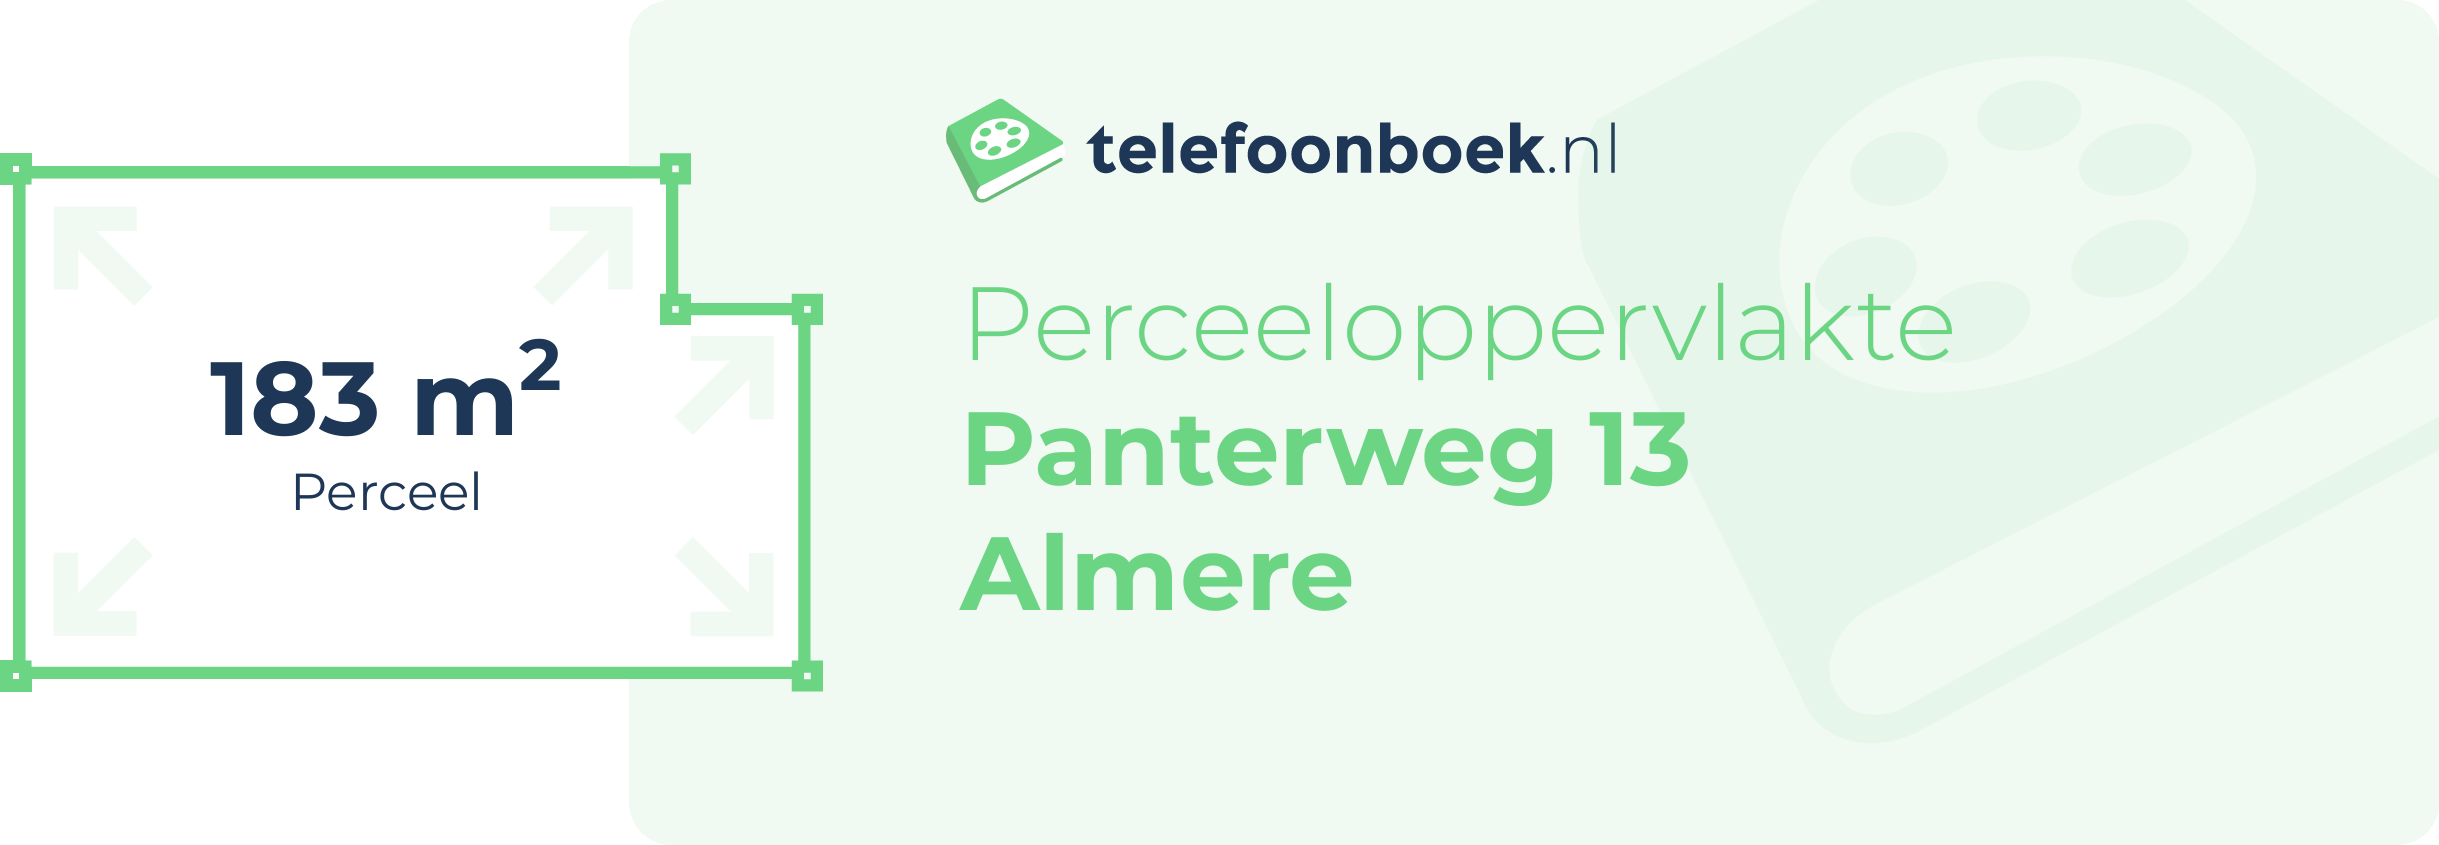 Perceeloppervlakte Panterweg 13 Almere